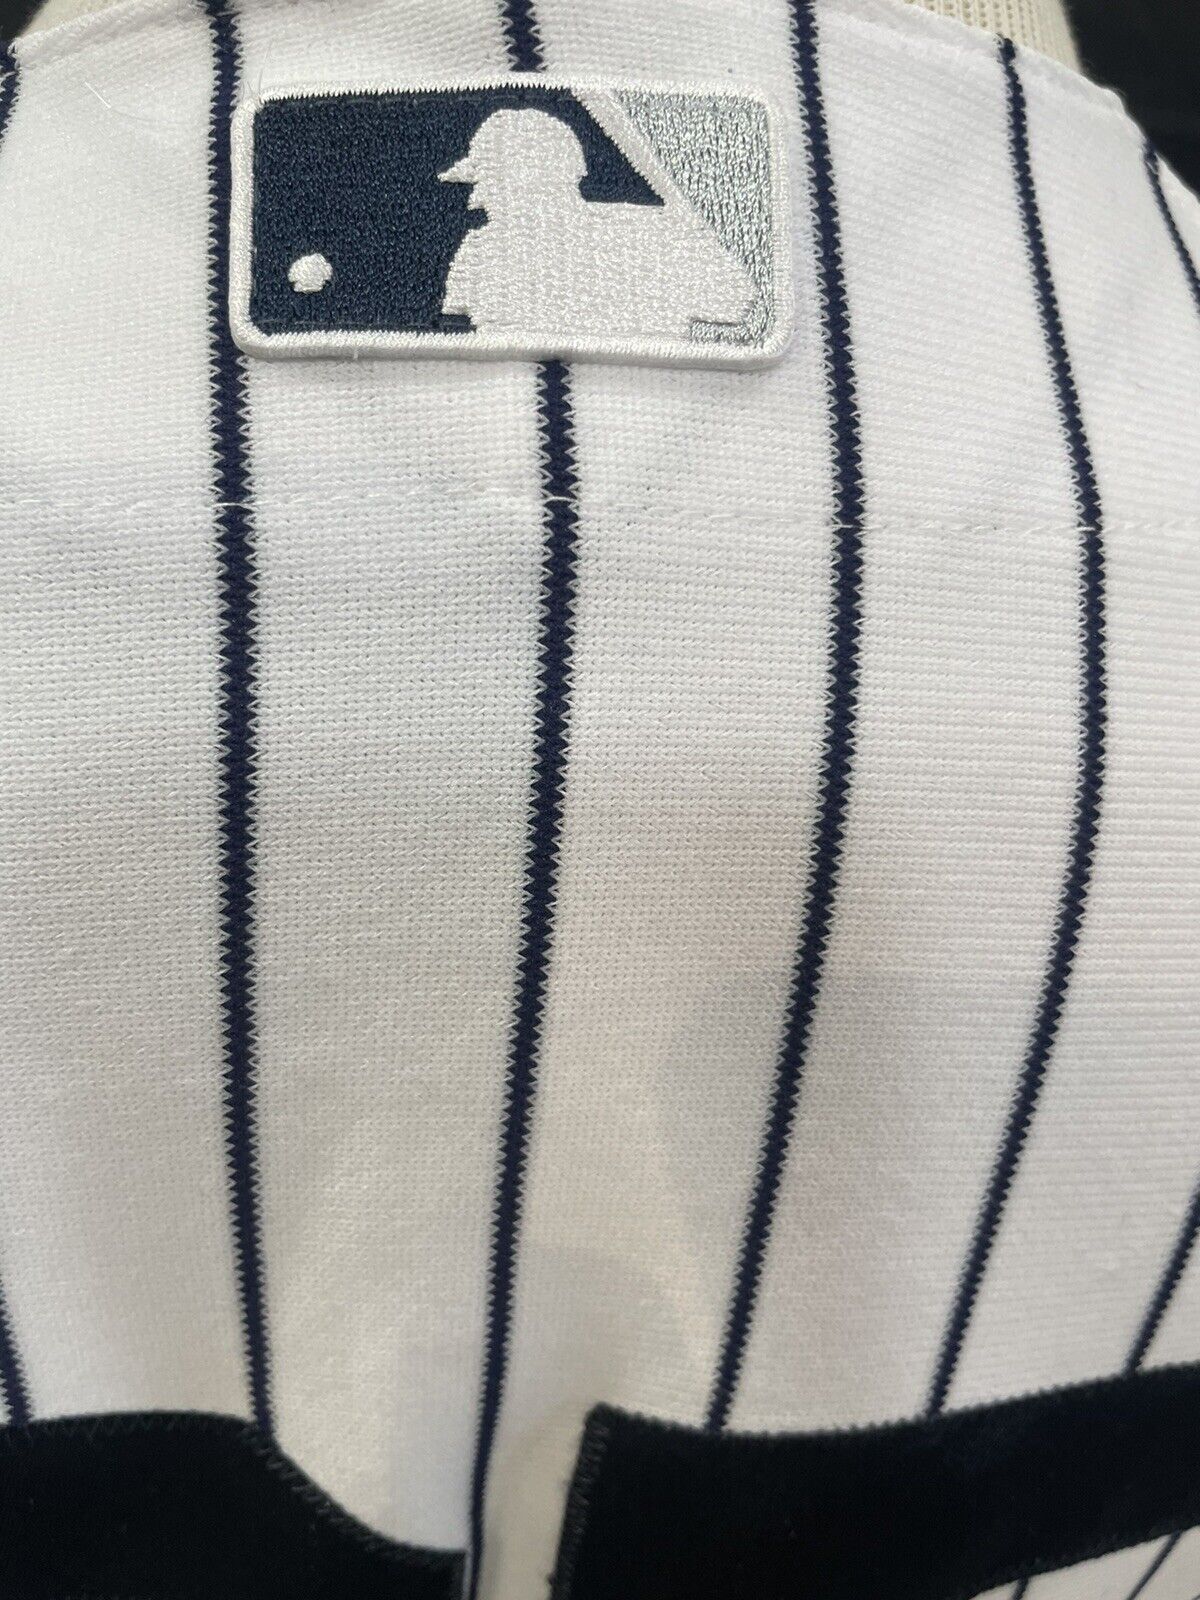 Mark Teixeira New York Yankees Autographed Home Pinstripe Jersey